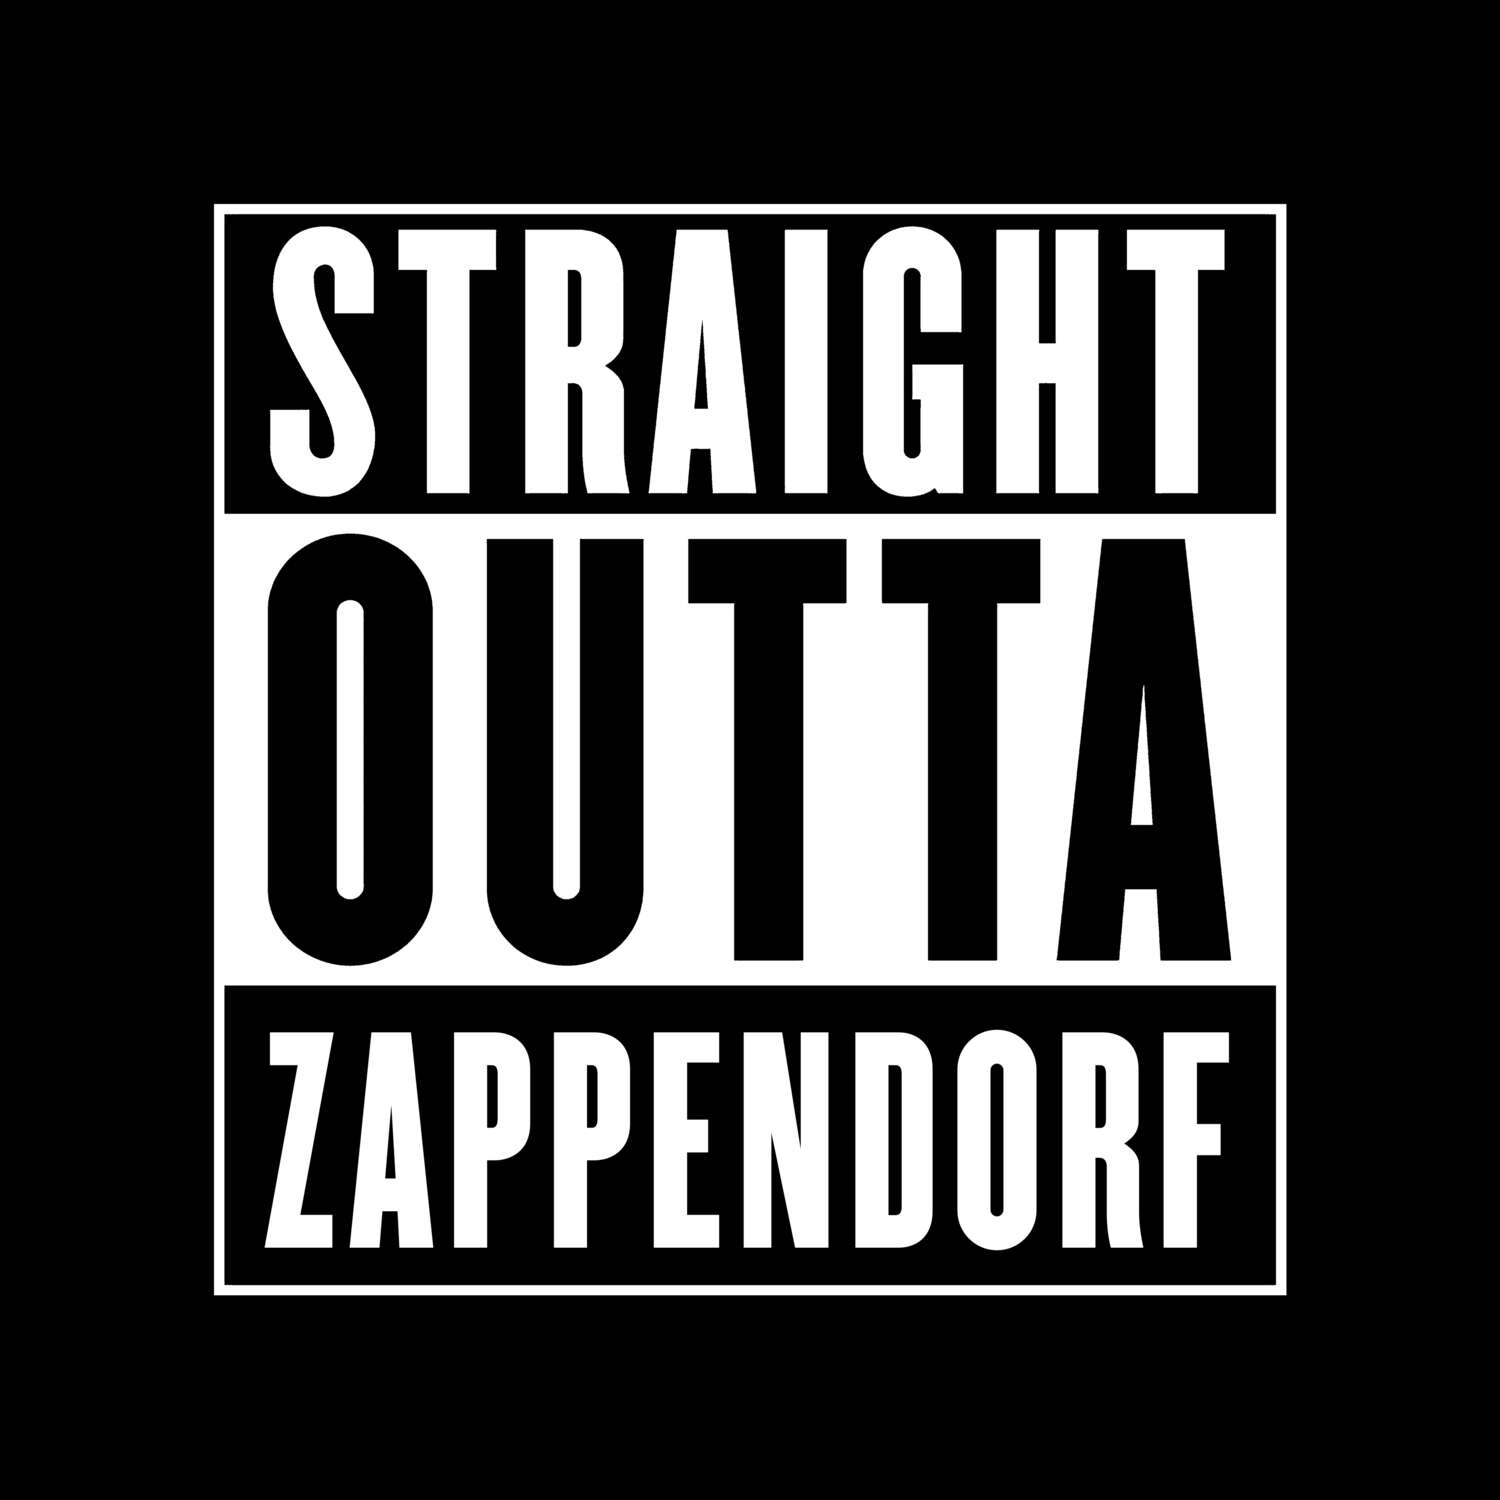 Zappendorf T-Shirt »Straight Outta«